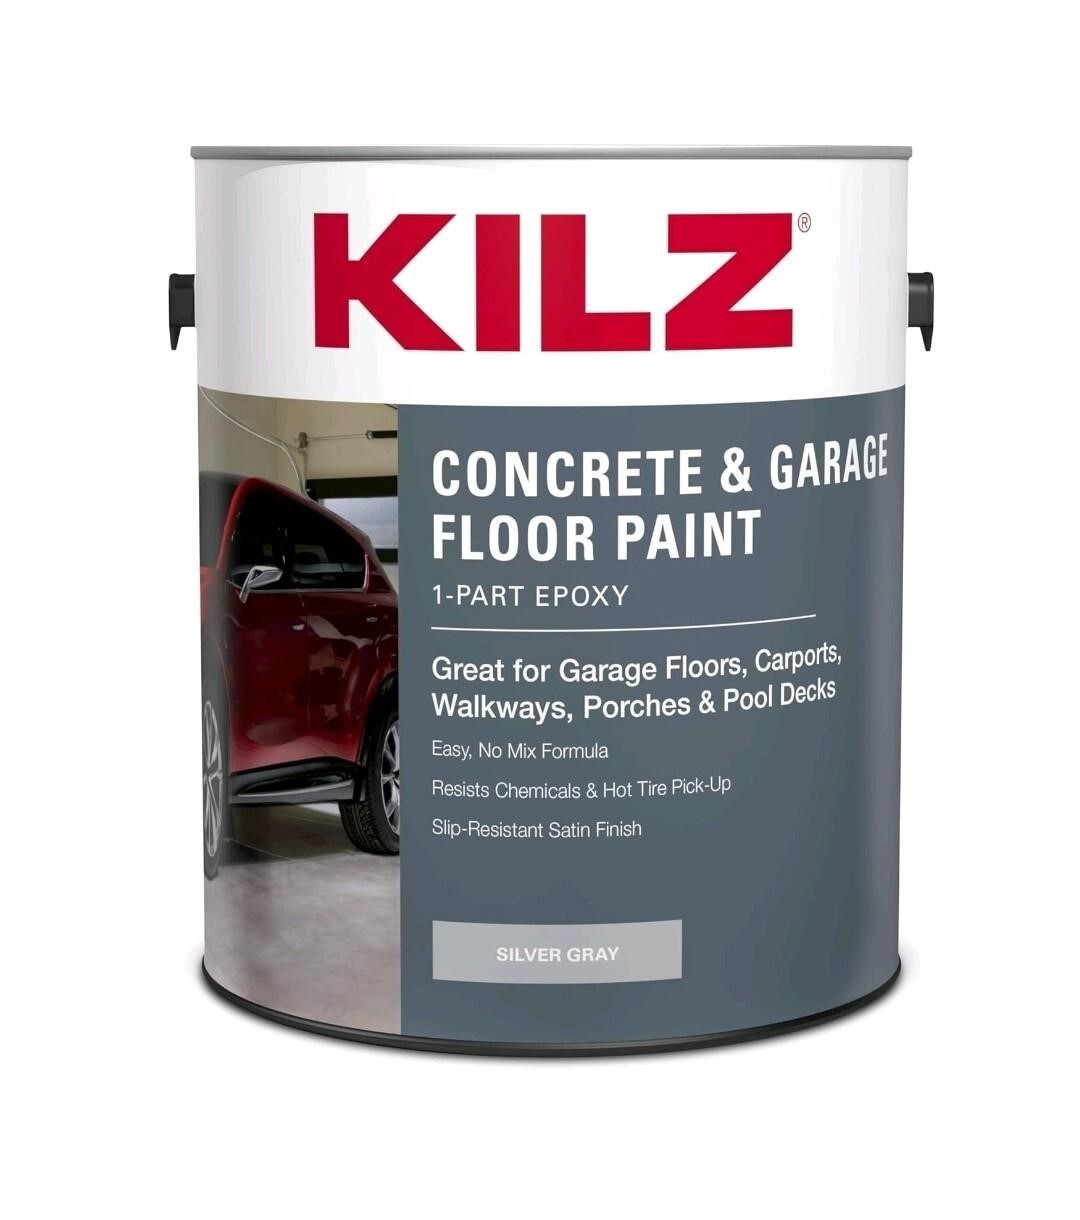 KILZ Concrete and Garage Floor Paint